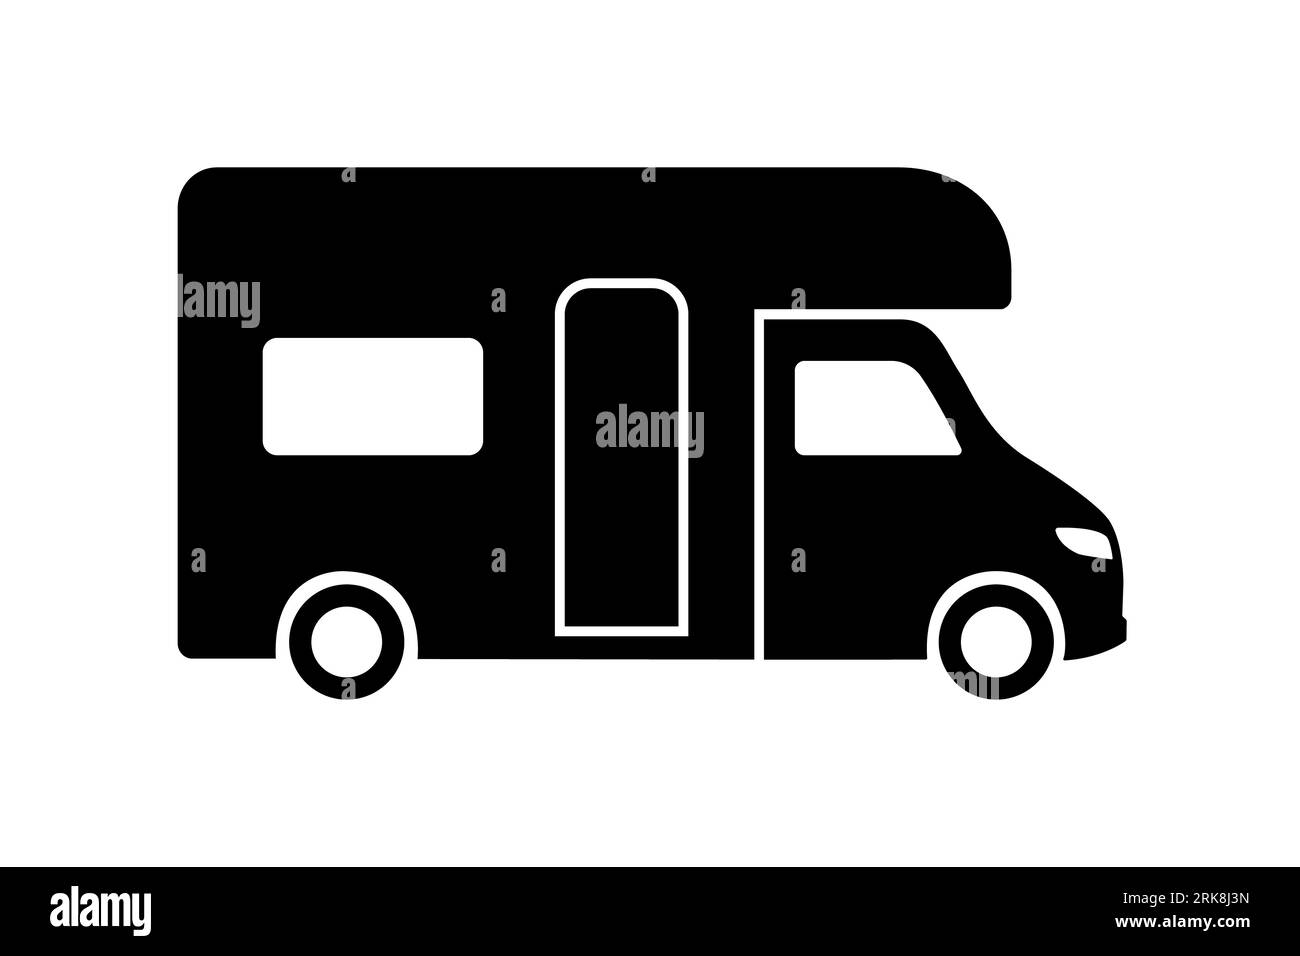 Motorhome symbol. Rv camper icon. Stock Photo